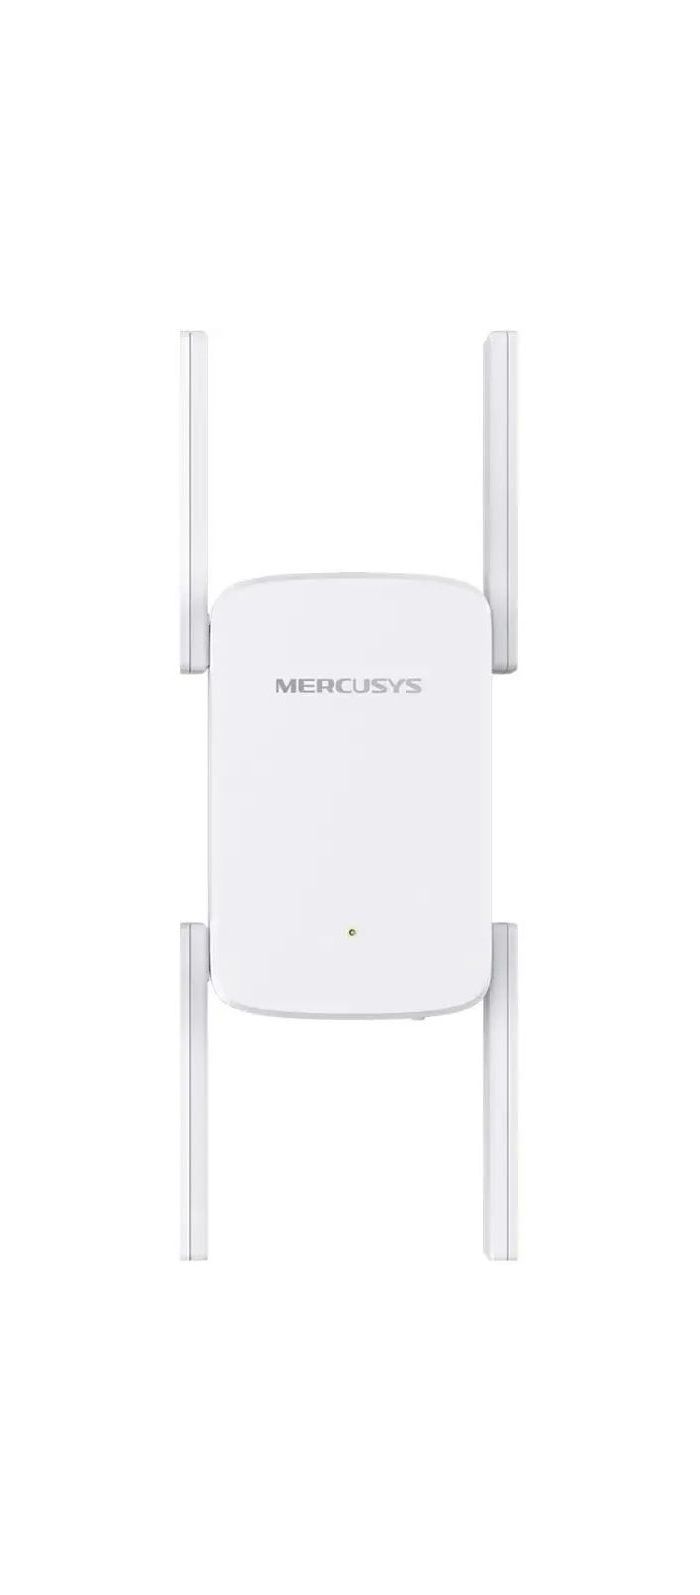 цена Усилитель Wi-Fi сигнала Mercusys ME50G